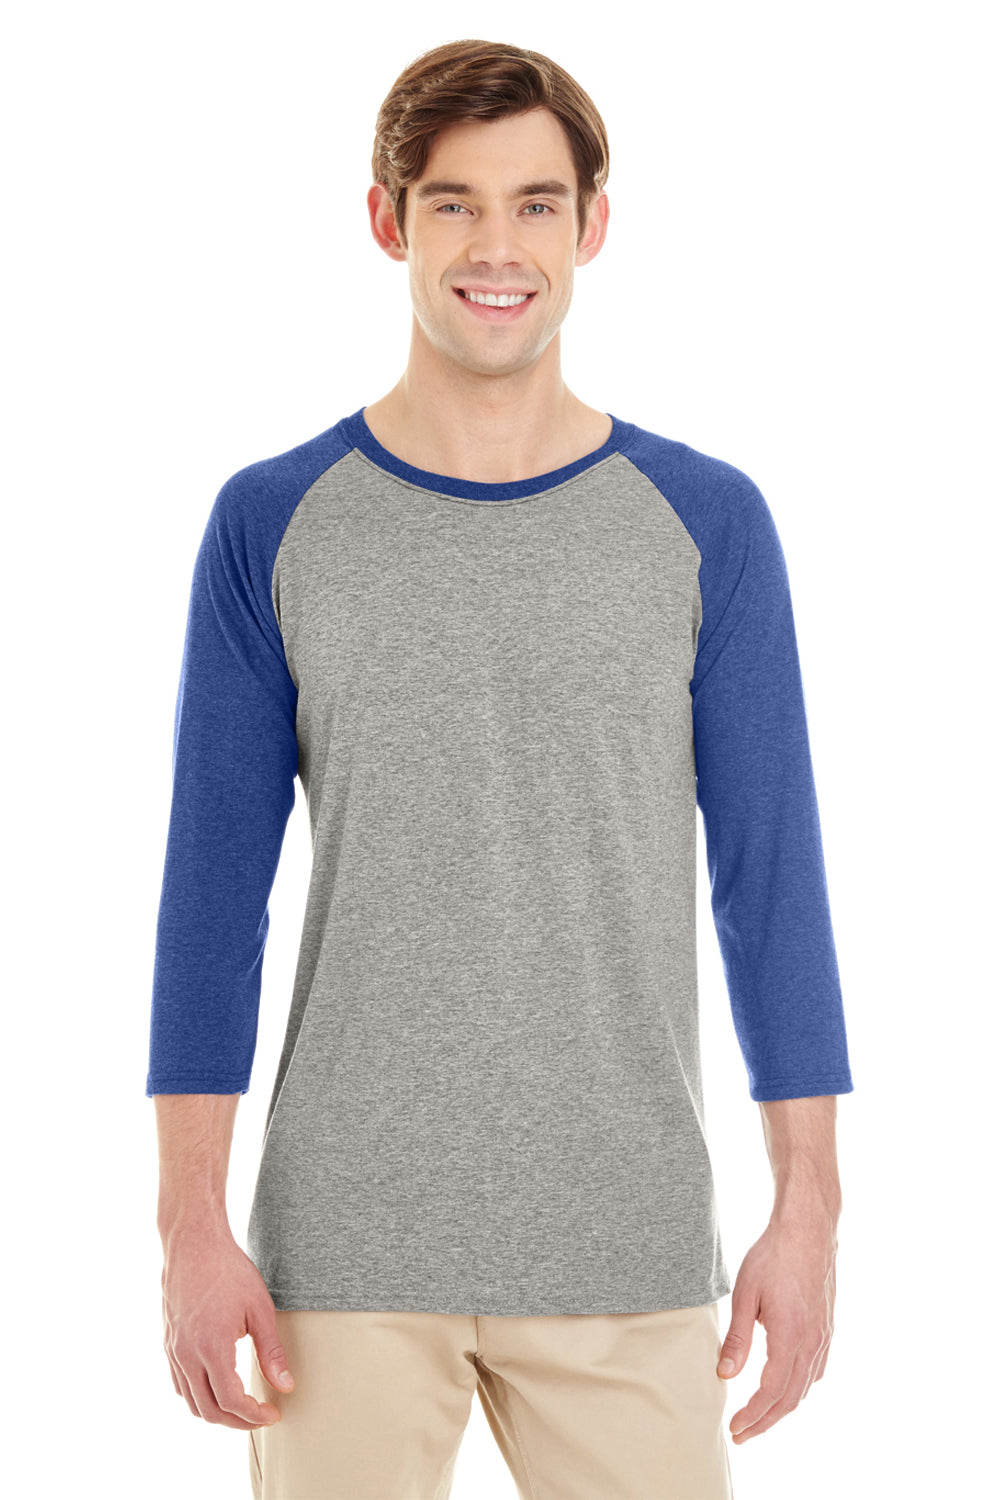 Jerzees 601RR Mens 3/4 Sleeve Crewneck T-Shirt Oxford Grey/Blue Front